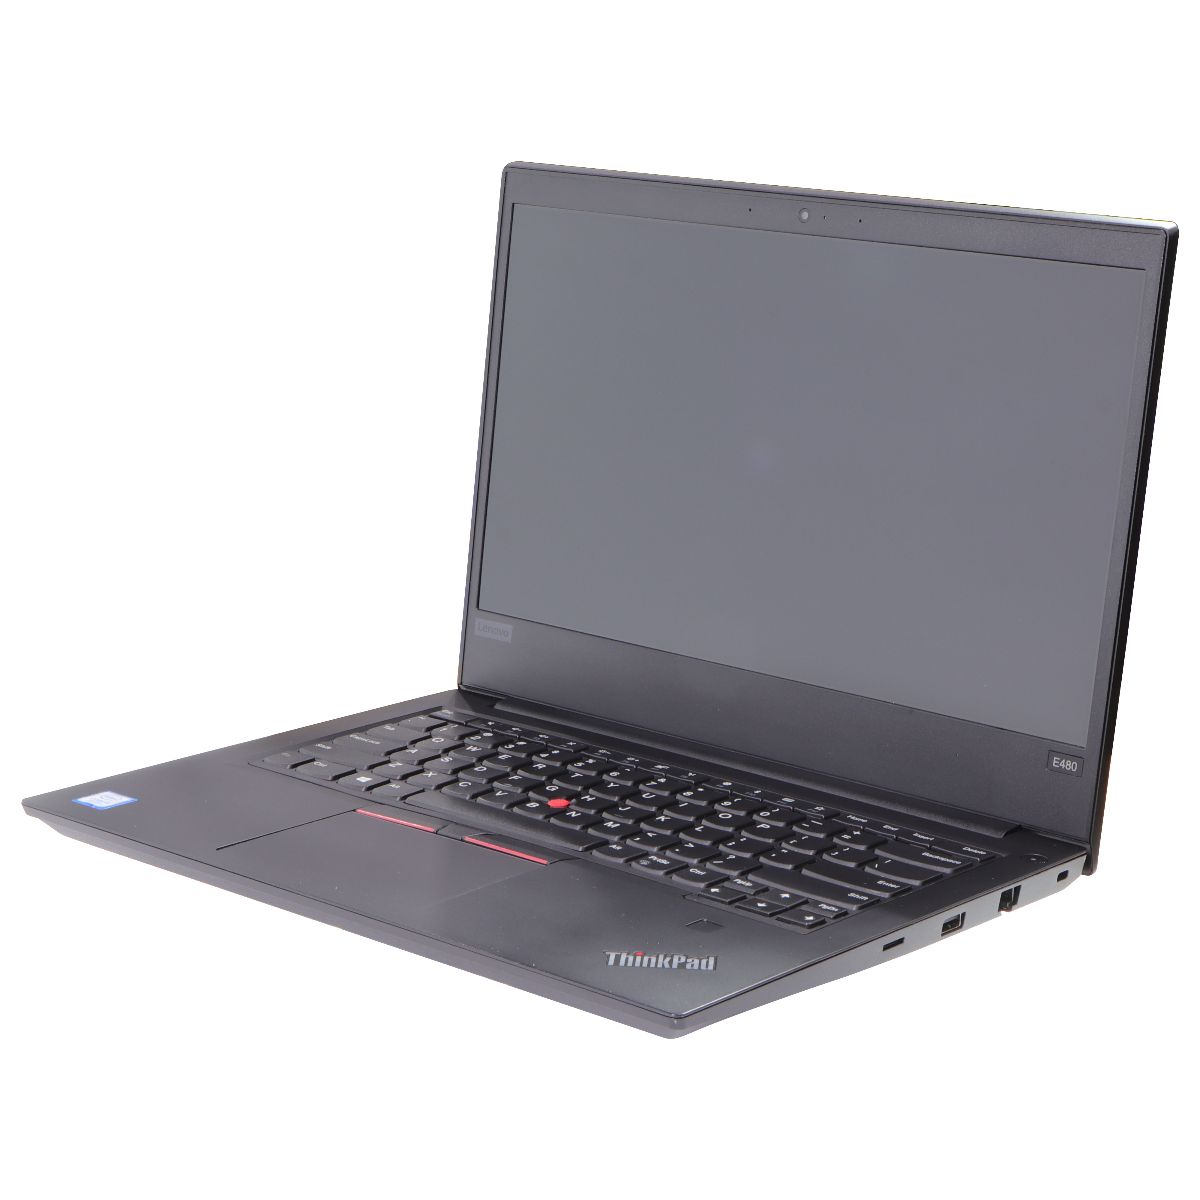 Lenovo ThinkPad E480 (14-in) FHD Laptop (20KN) i5-8250U/256GB/8GB/10 Pro Laptops - PC Laptops & Netbooks Lenovo    - Simple Cell Bulk Wholesale Pricing - USA Seller